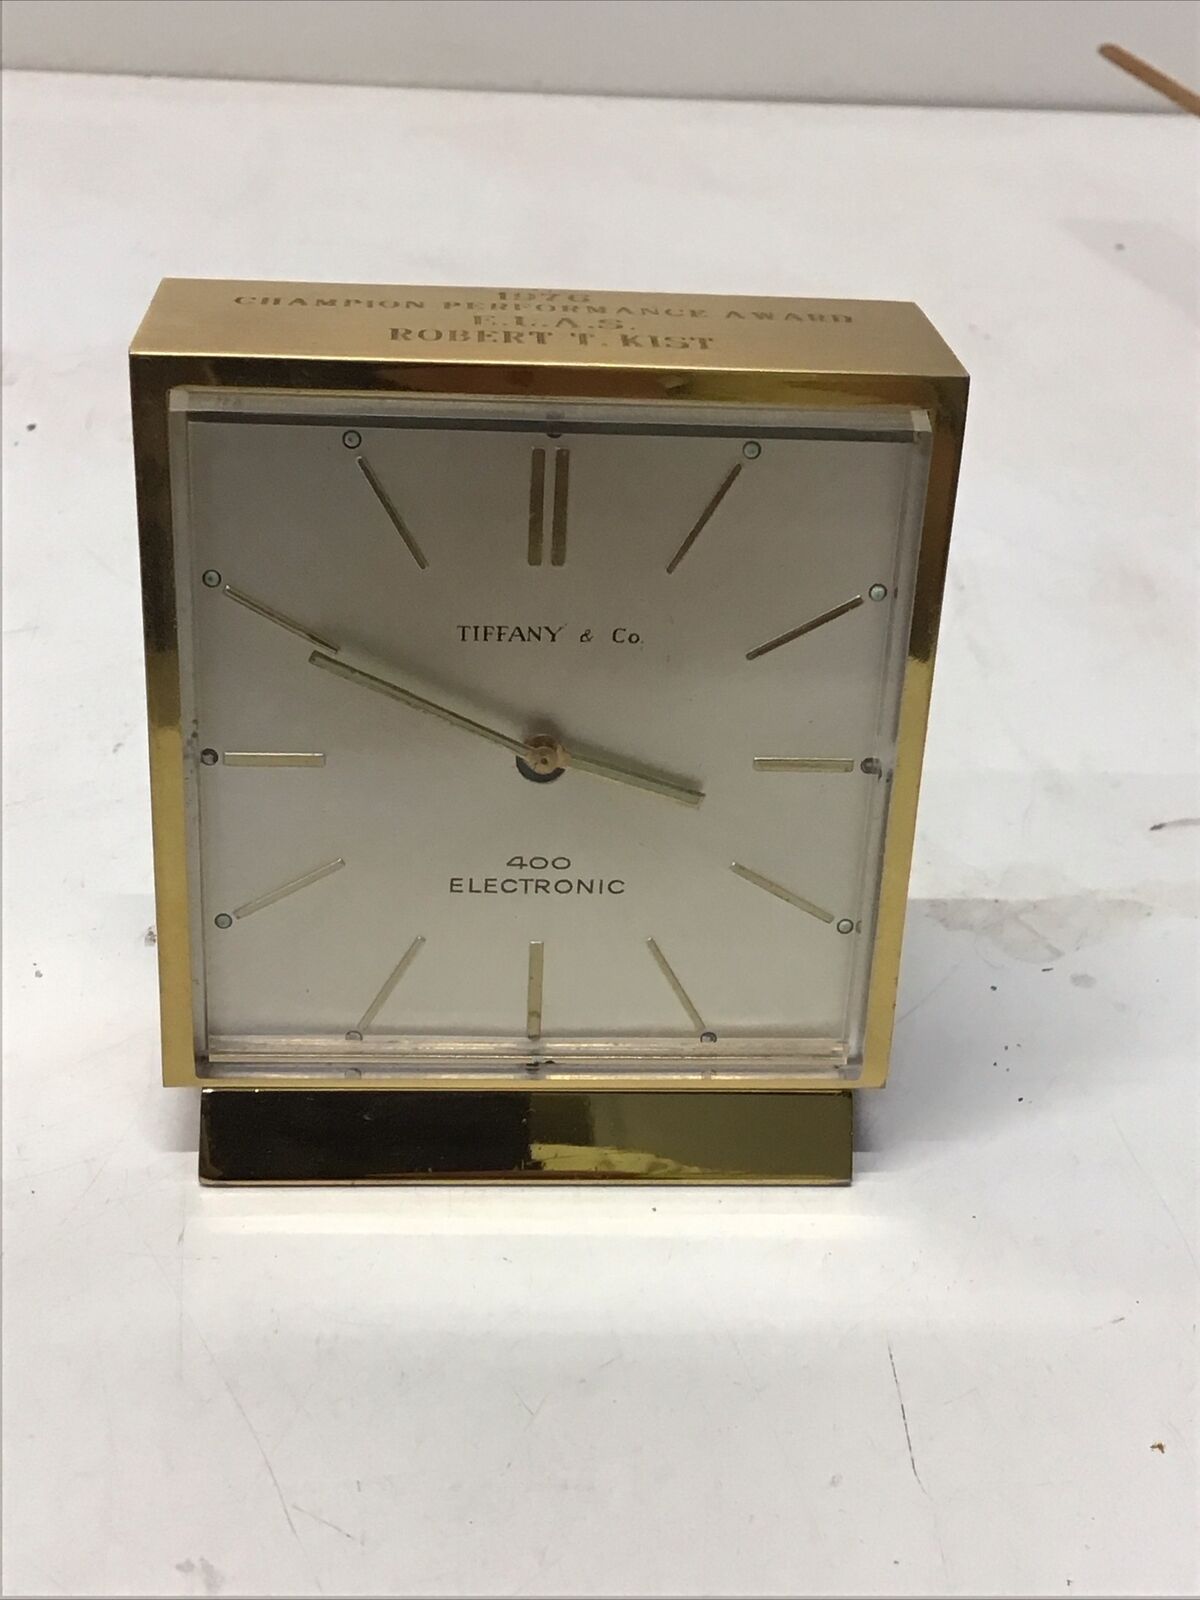 Small Tiffany & Co 400 Electronic Bayard France 5 Jewels Battery Clock